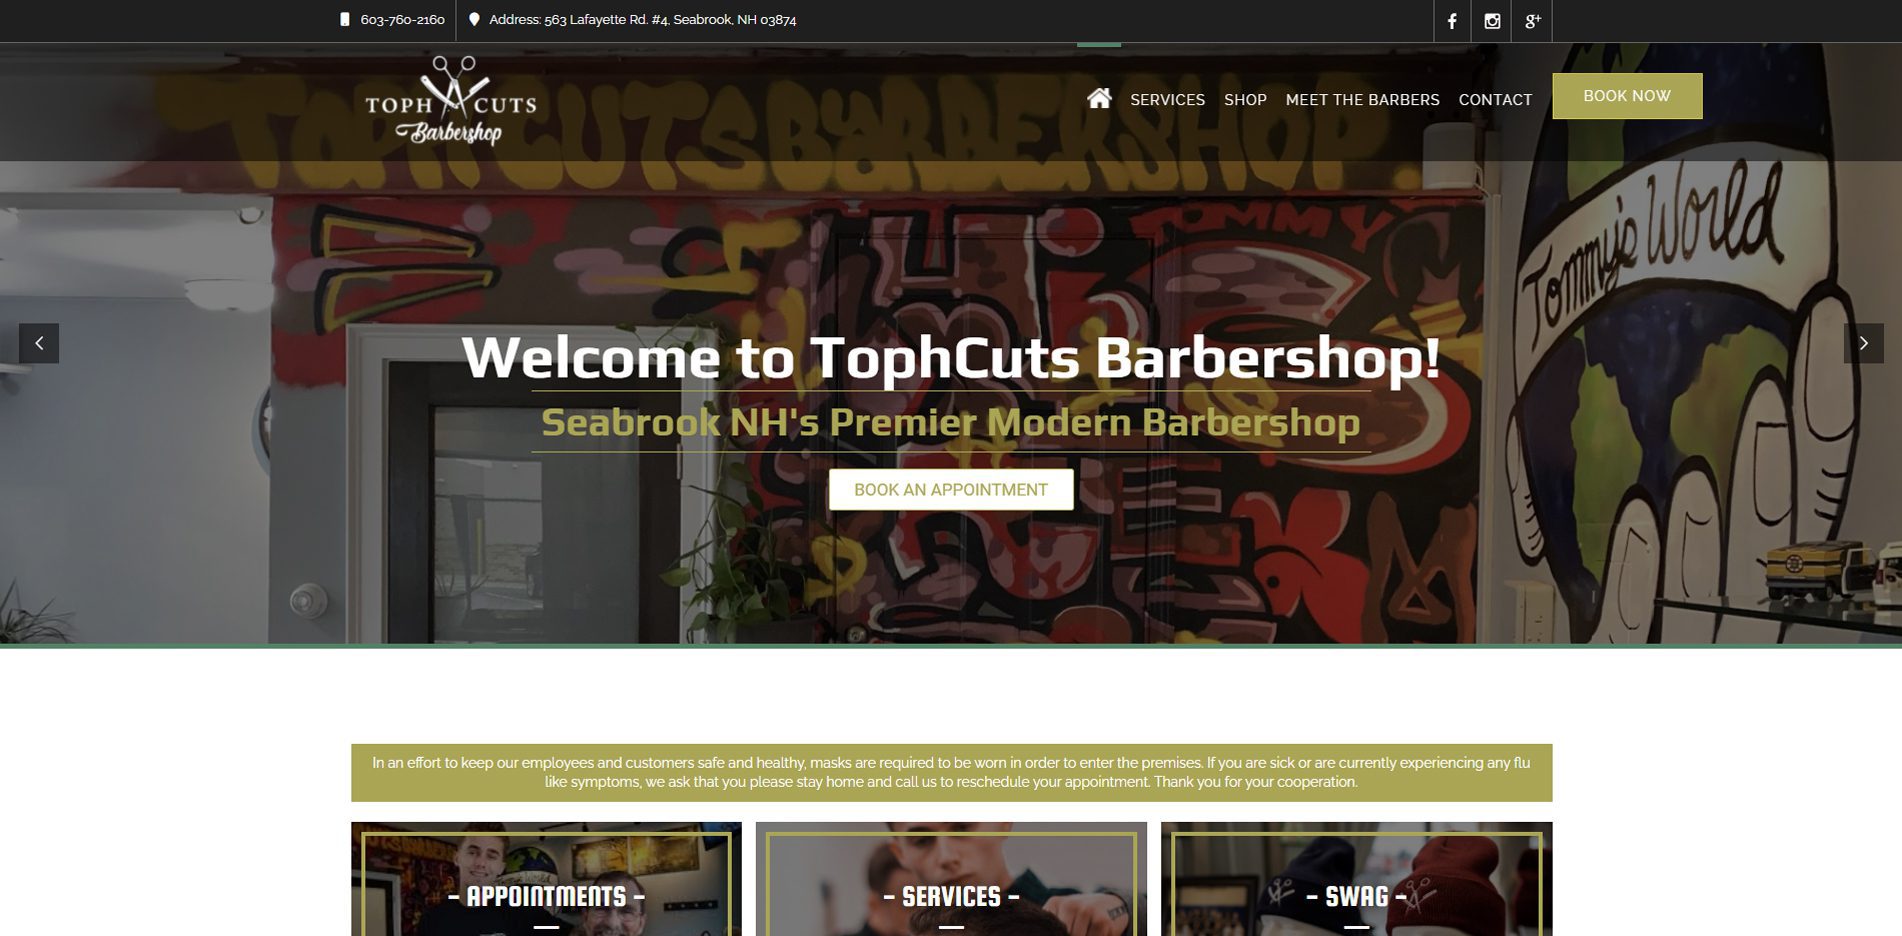 Tophcuts Barbershop